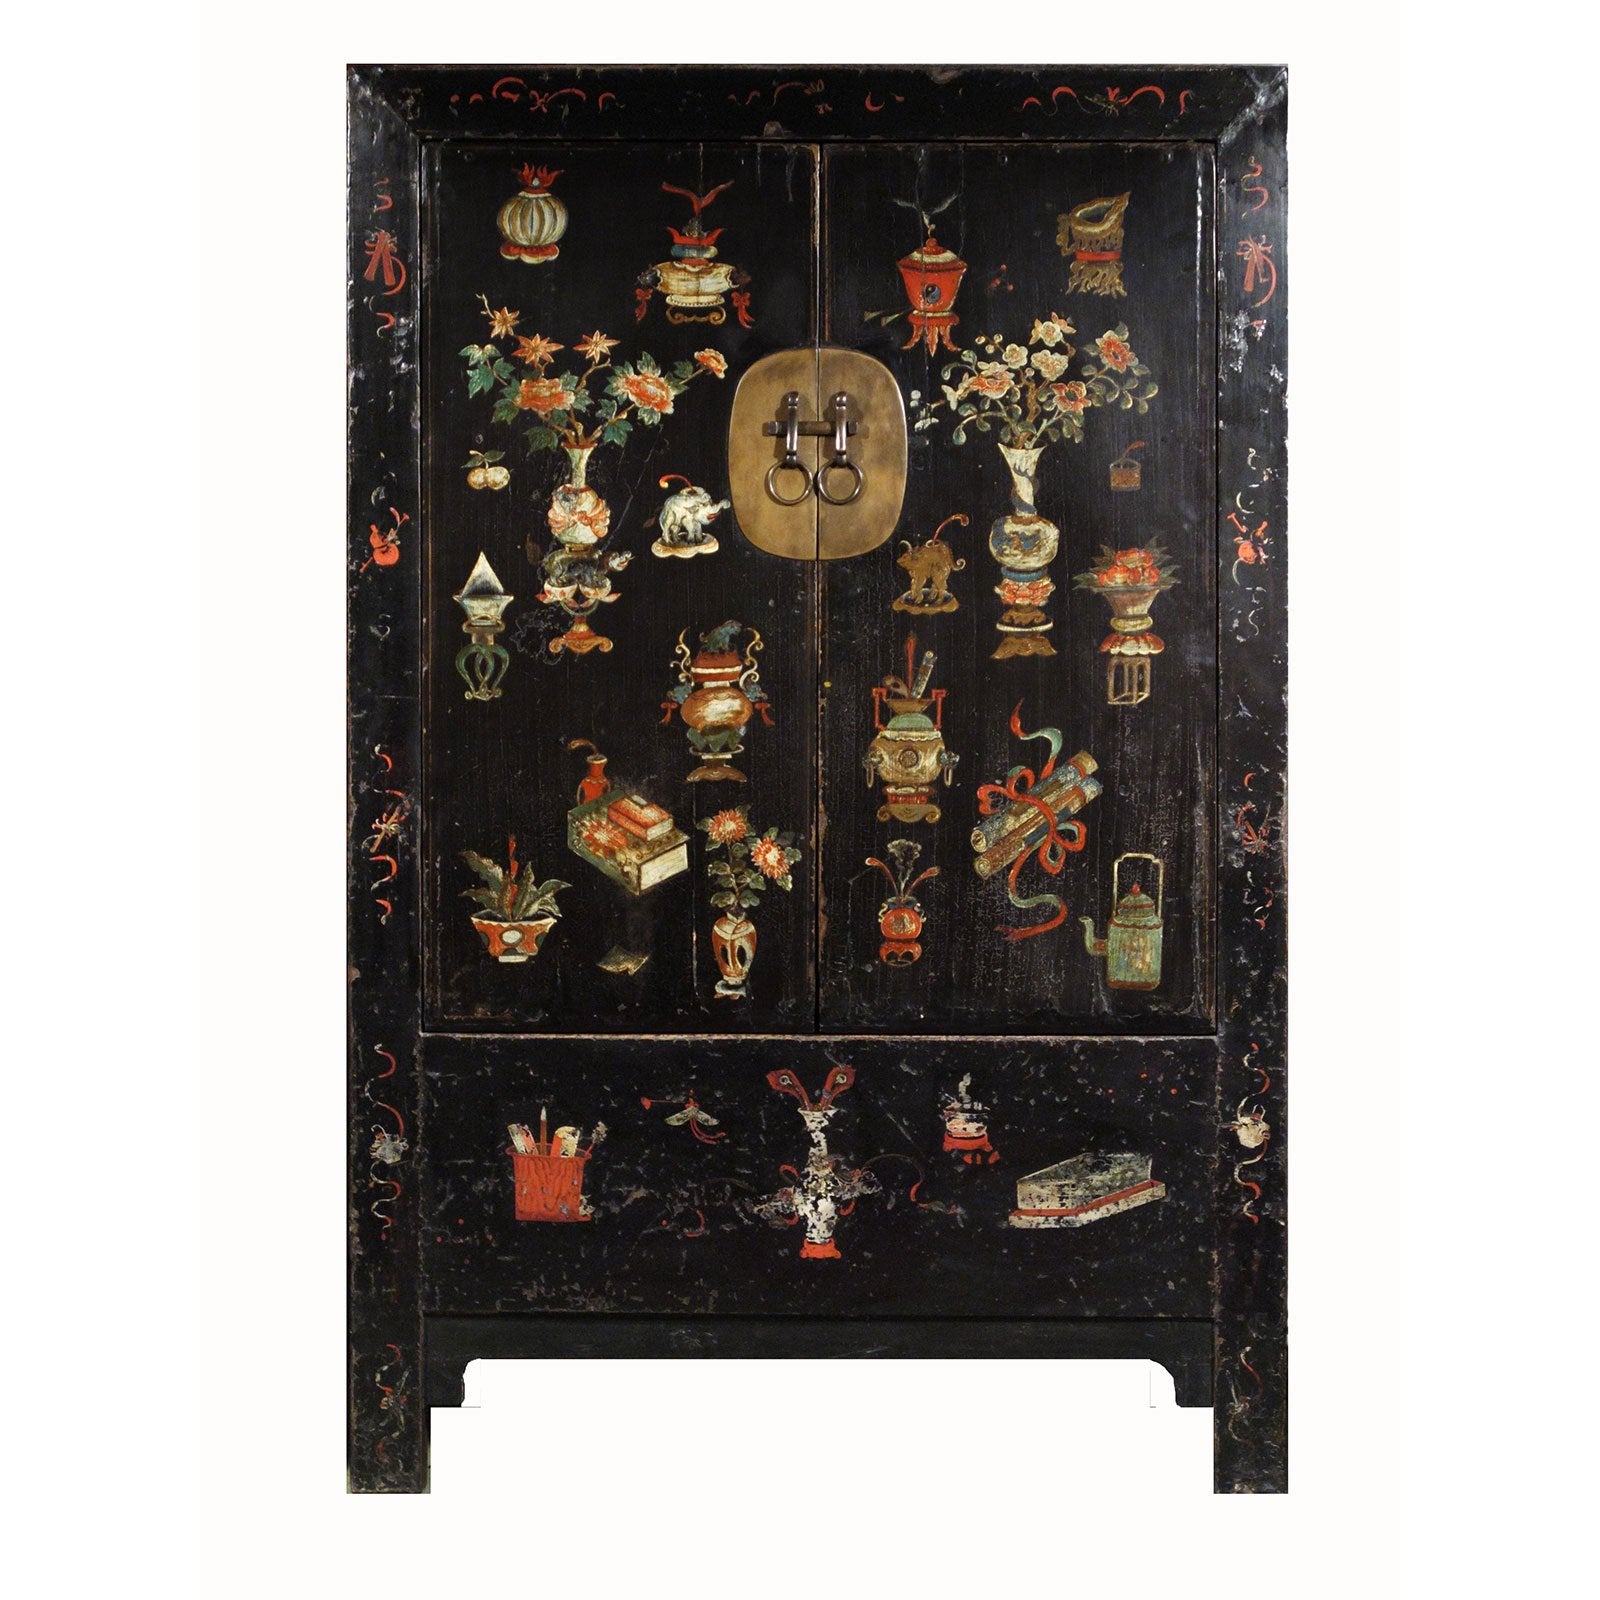 Original Black Lacquer Cabinet - From Shanxi Province - 19thC | Indigo Oriental Antiques